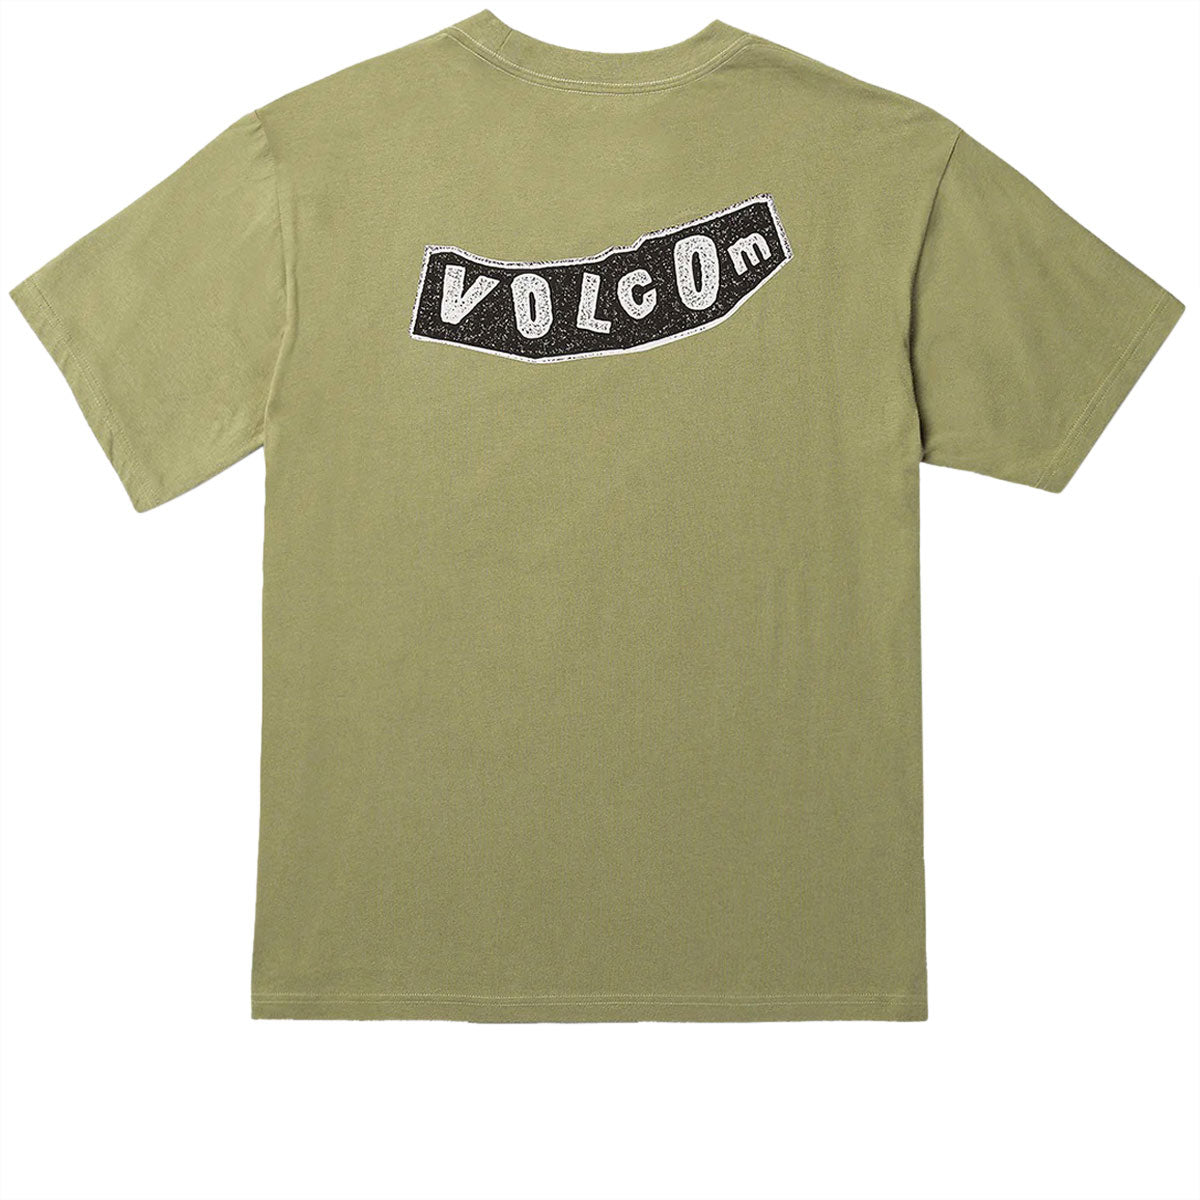 Volcom Skate Vitals Originator T-Shirt - Thyme Green image 2